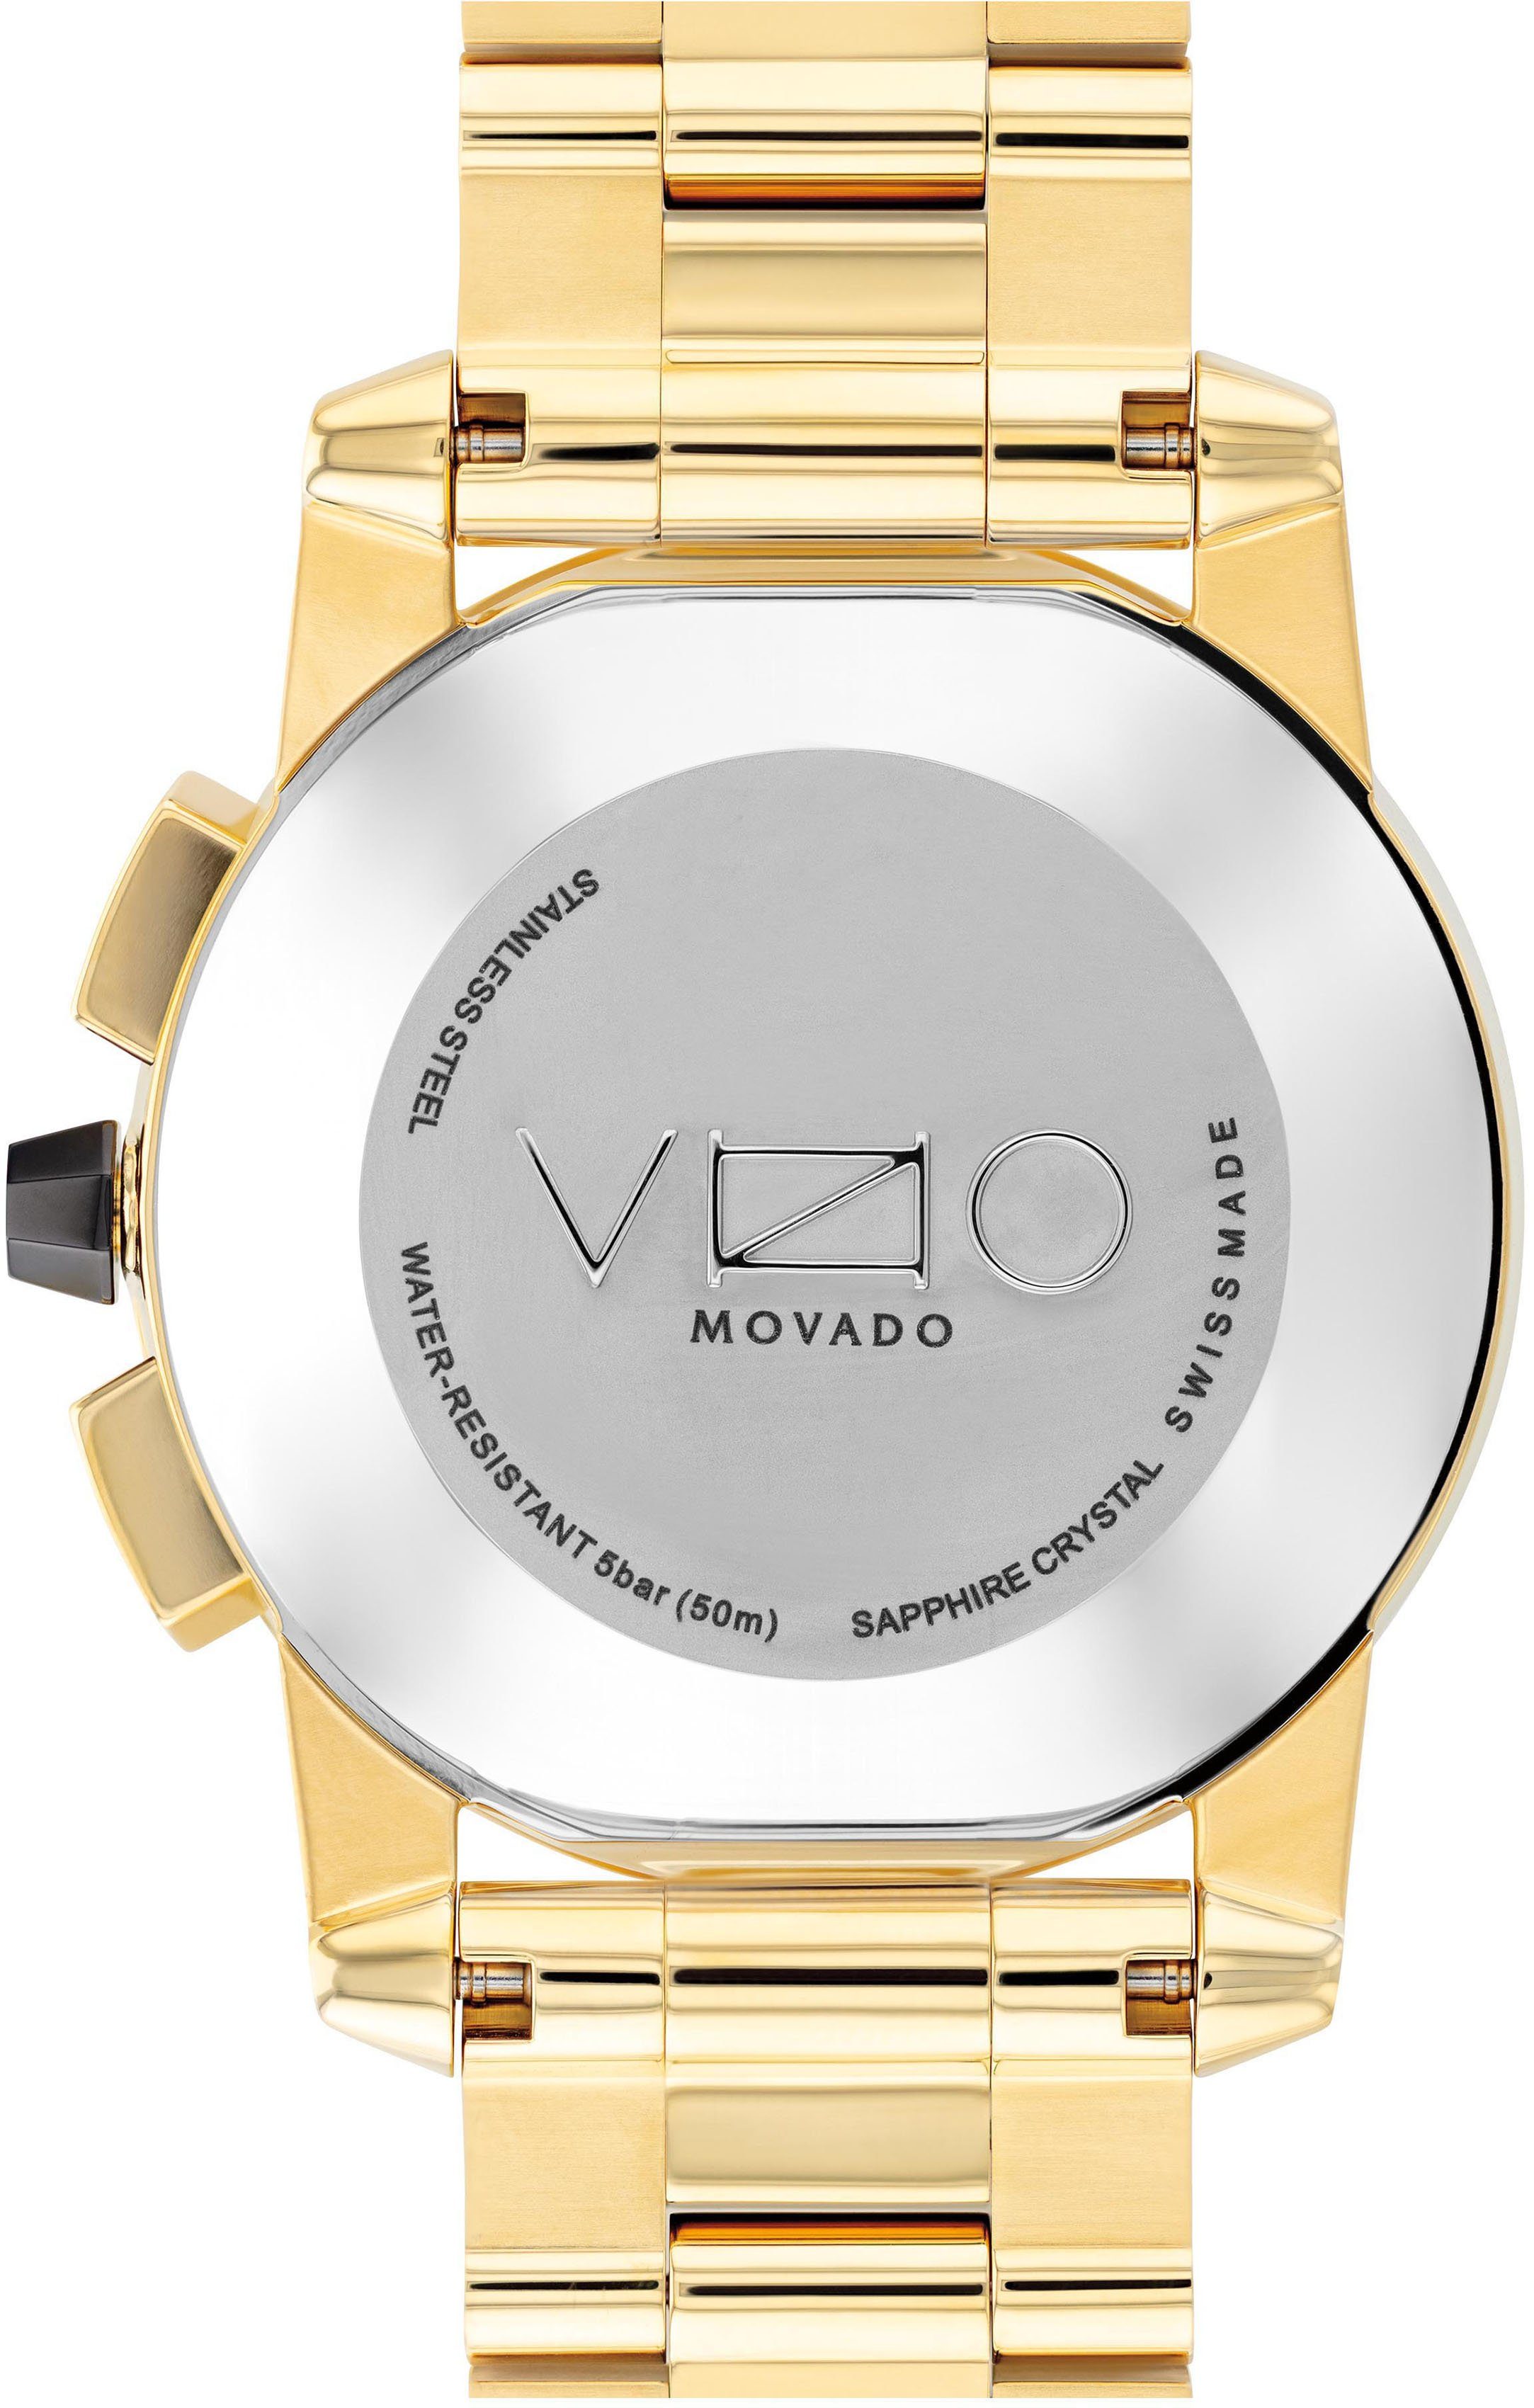 Herren Uhren MOVADO Chronograph Vizio, 0607563